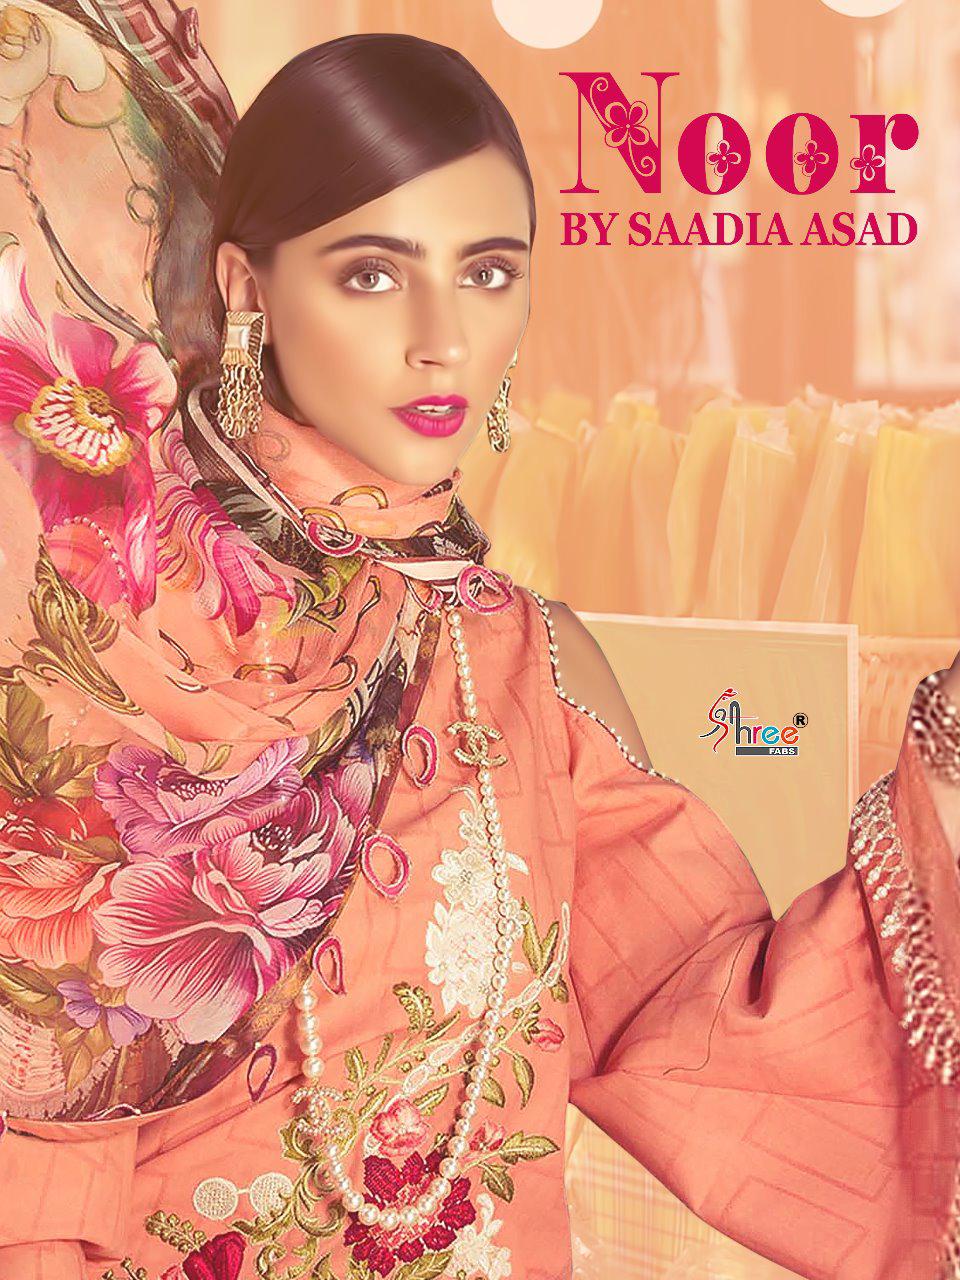 Shree fabs noor by sadia asad heavy embroidered pakistani salwar kameez collection